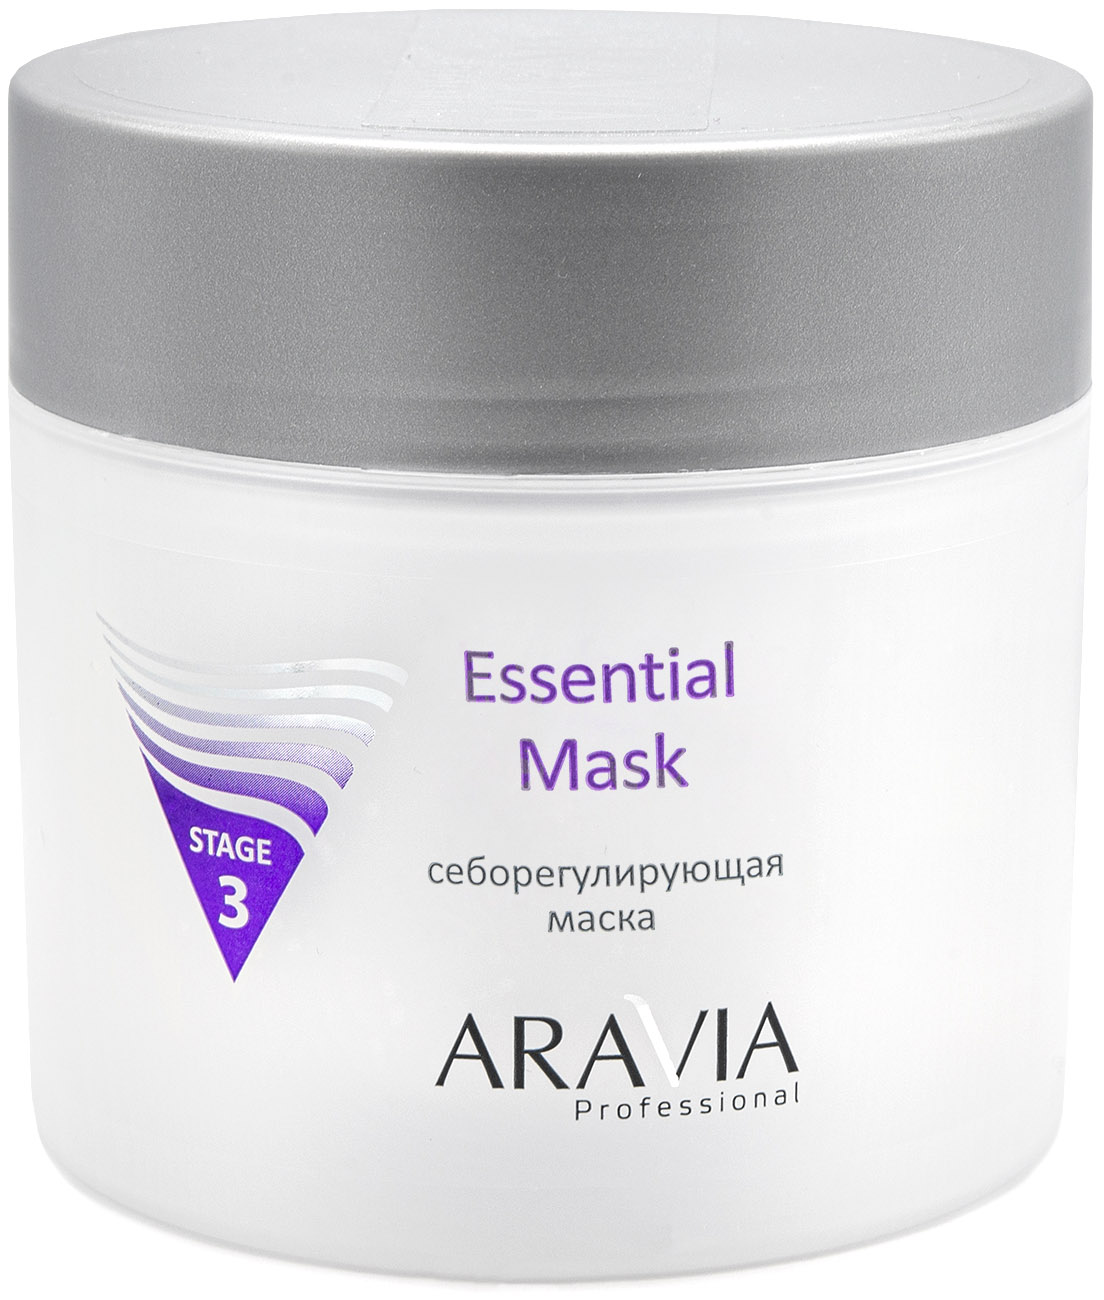 Aravia Professional Маска себорегулирующая Essential Mask, 300 мл (Aravia Professional, Уход за лицом) цена и фото